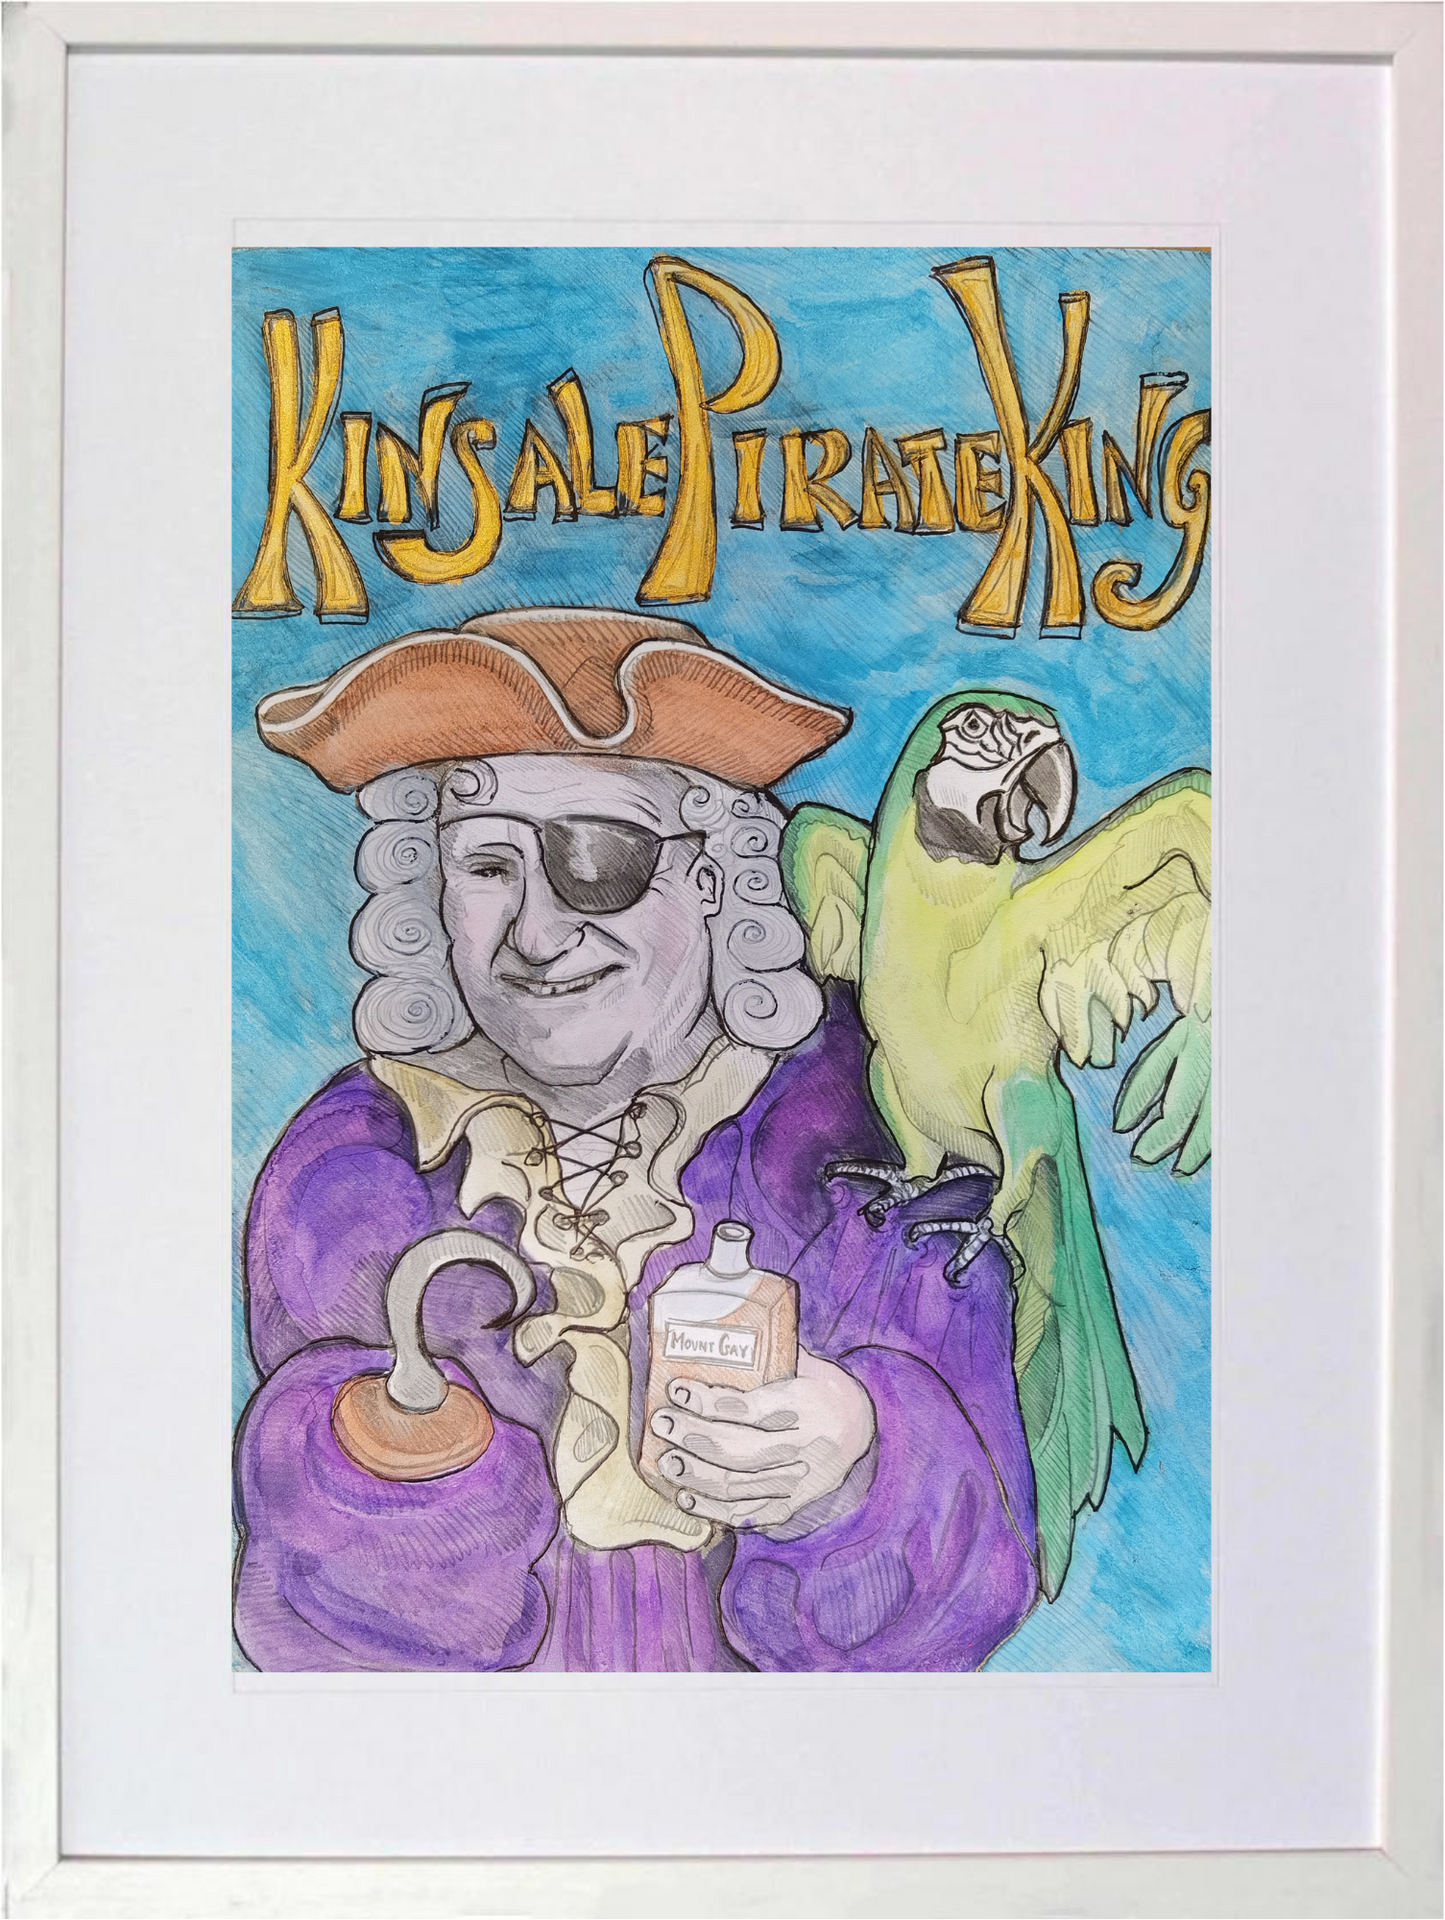 Kinsale Pirate King